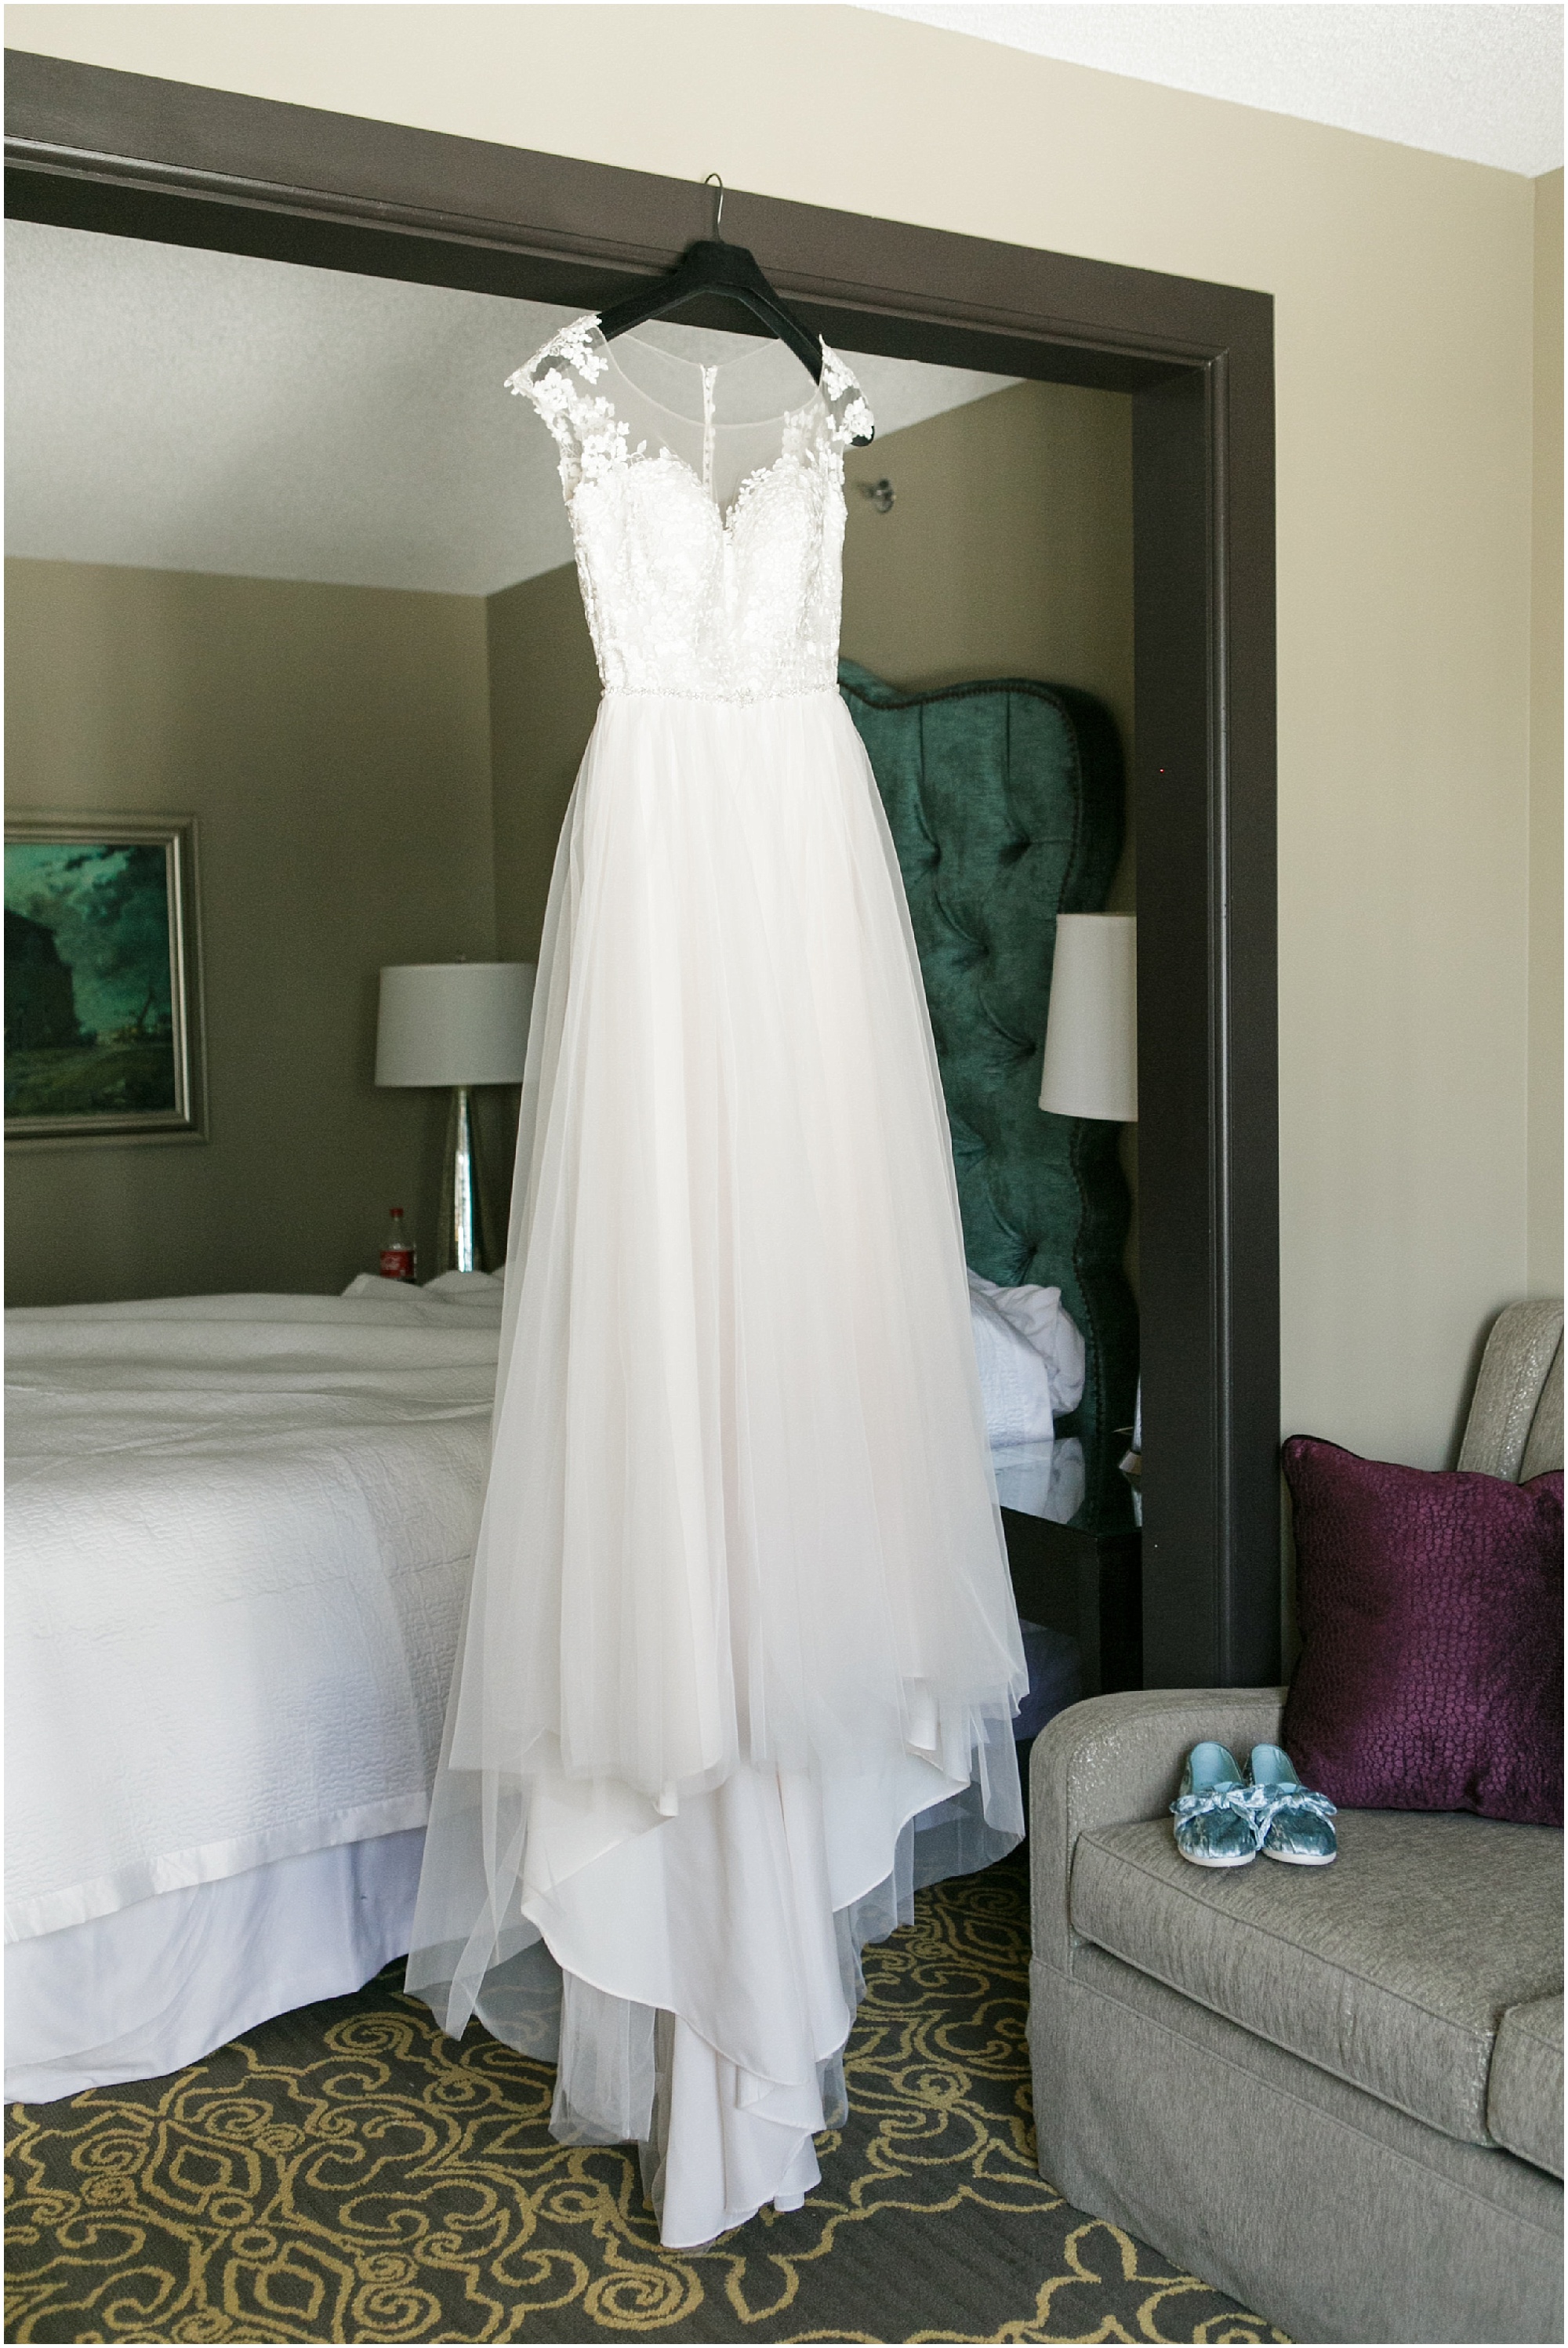 Bride's wedding dress hanging from a doorframe. 